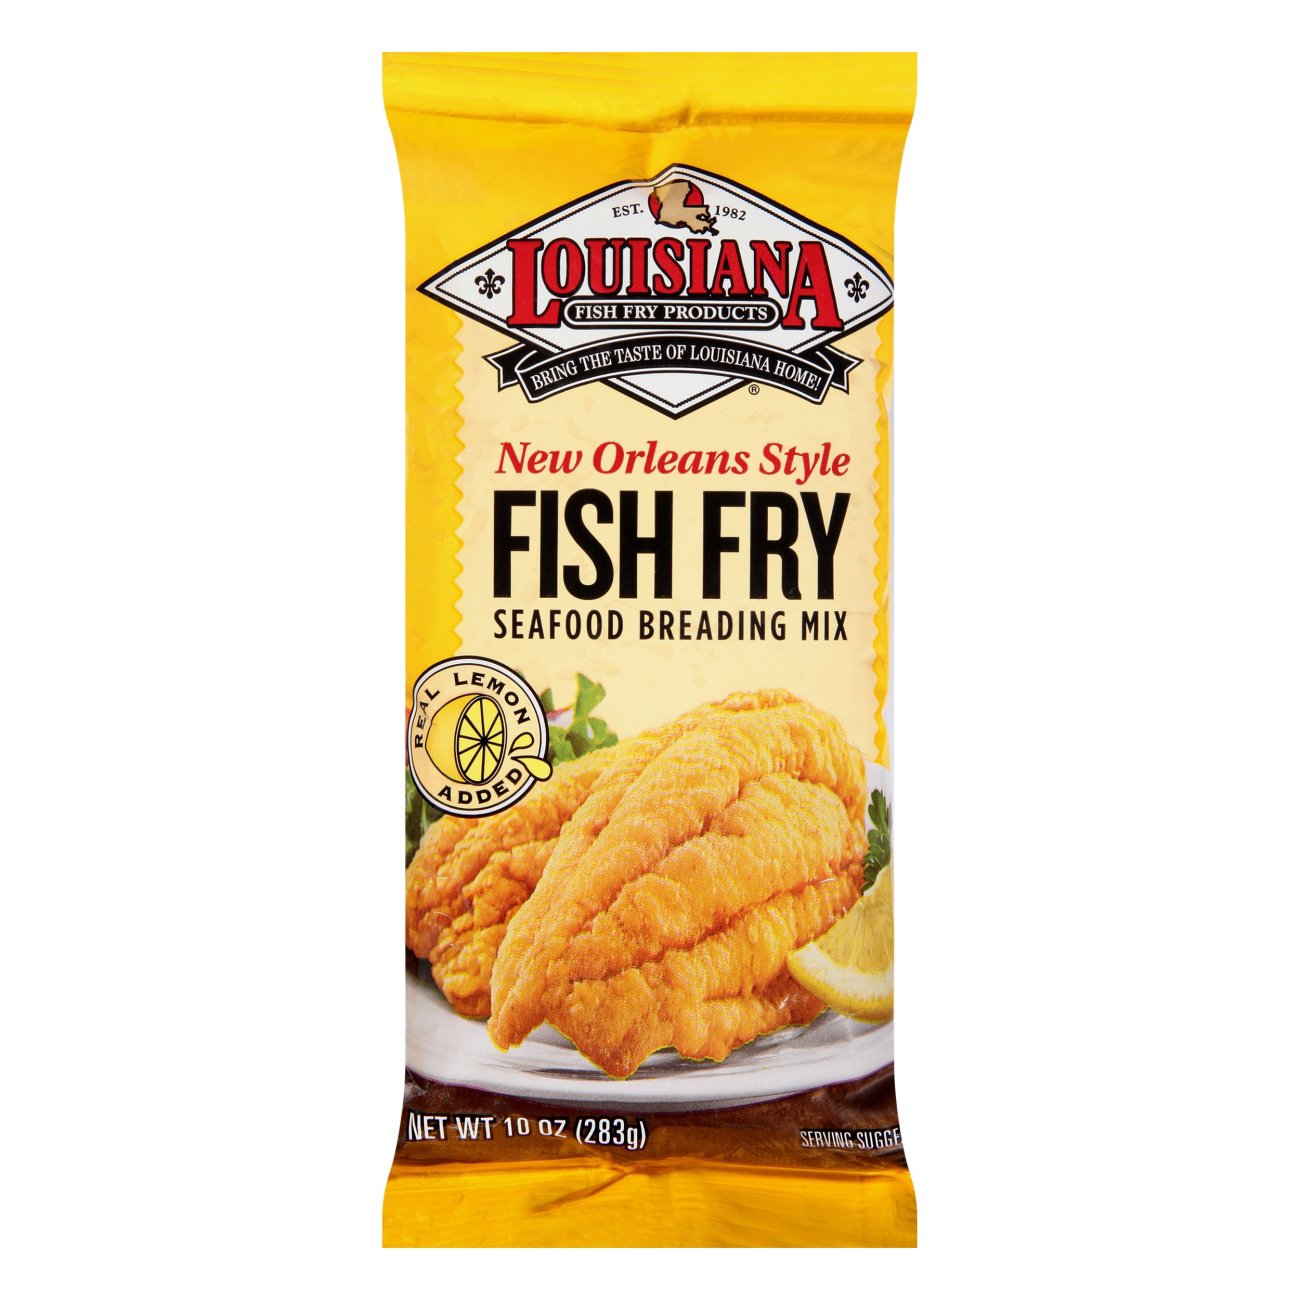 Louisiana Fish Fry Seasoned Fish Fry